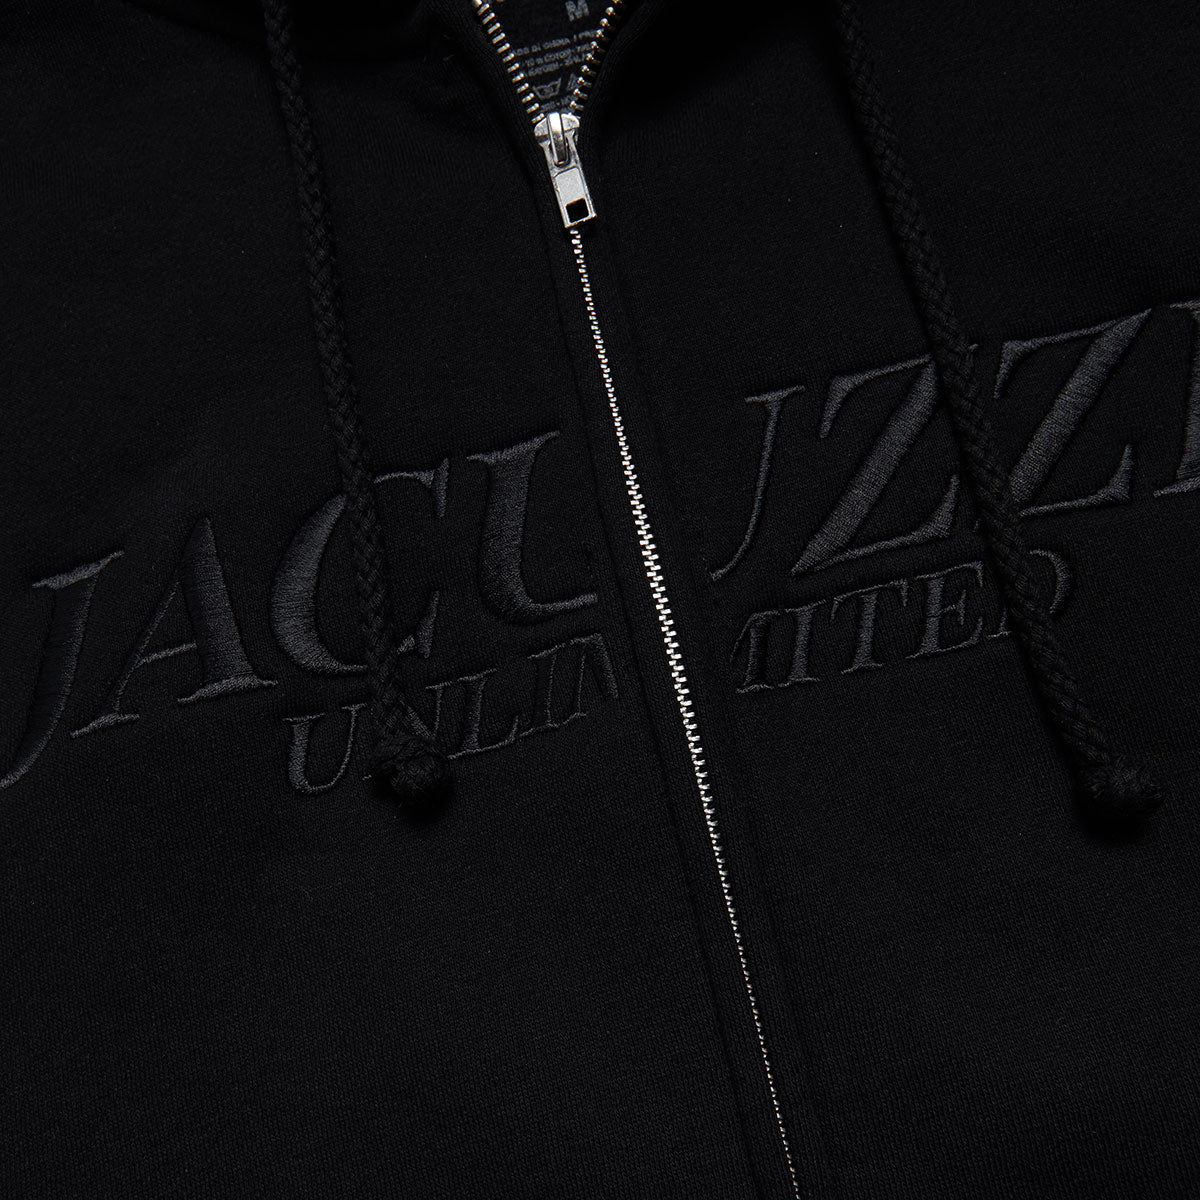 Jacuzzi Flavor Embroidered Zip Up Hoodie - Black image 3